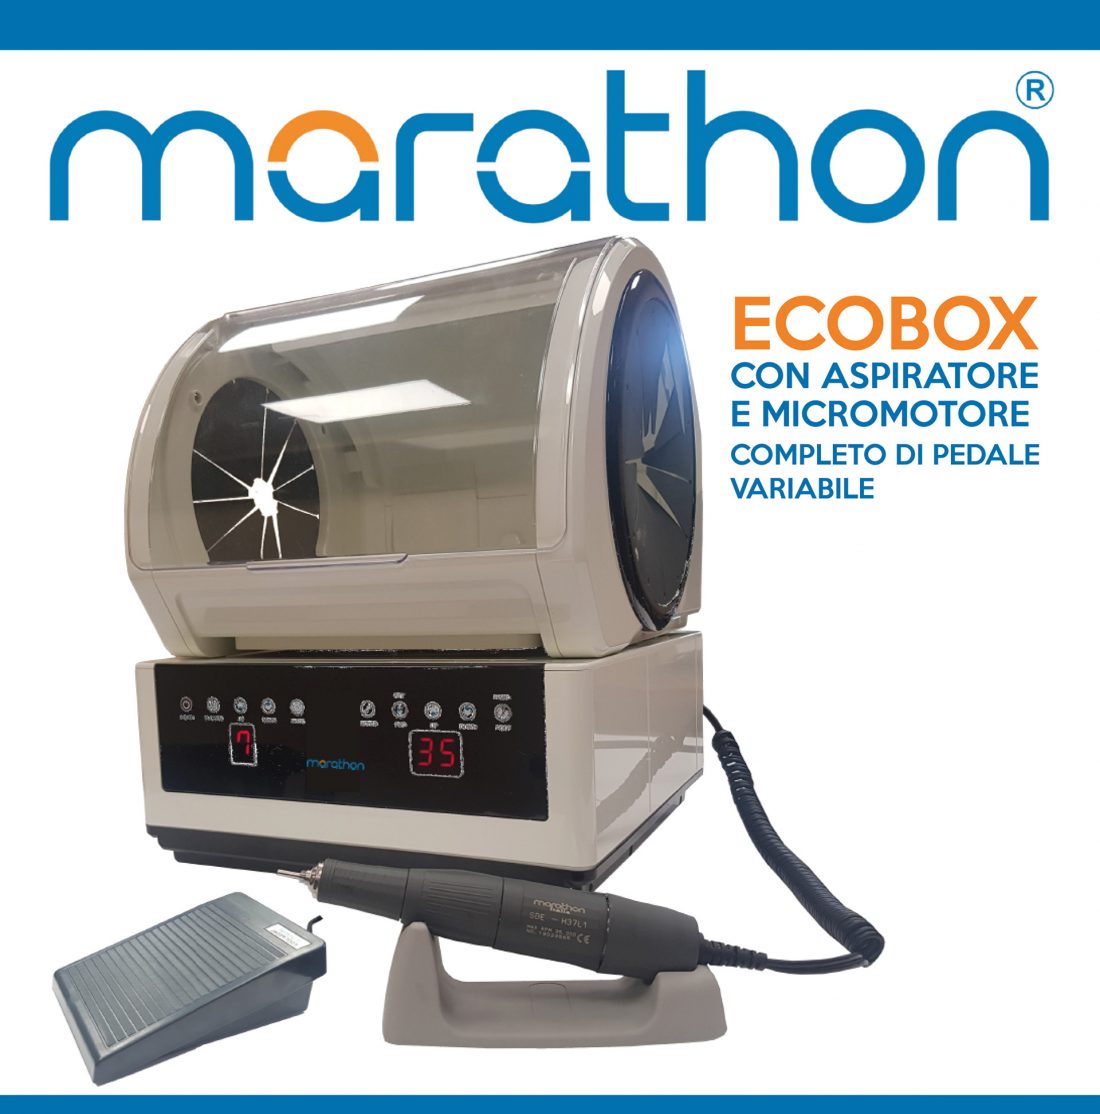 eco box marathon aspiratore micoromotore